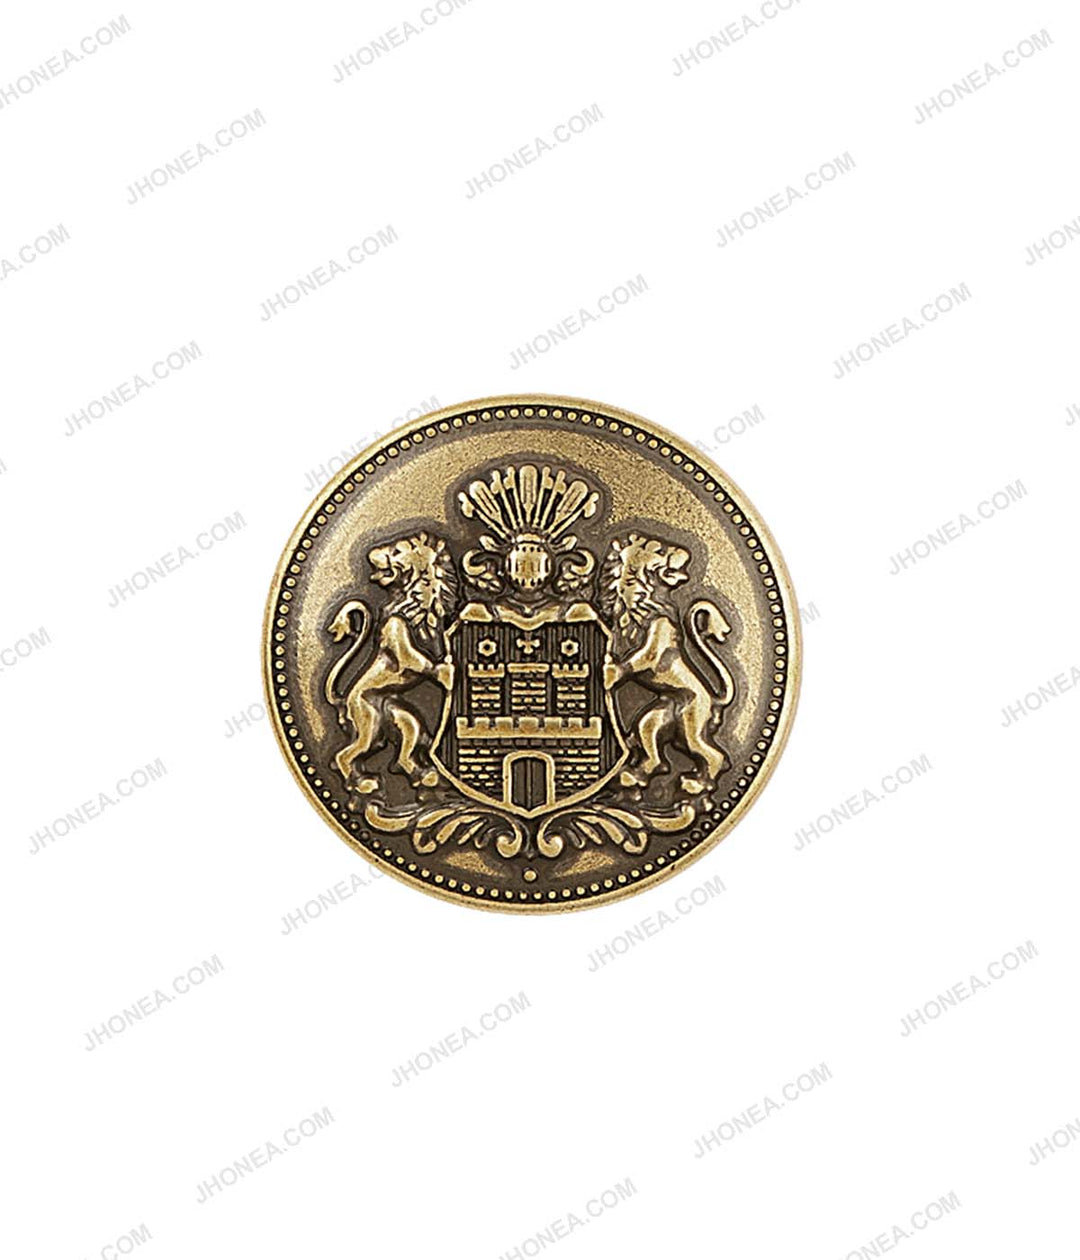 Lion Heraldic Coat of Arms Shield Crest Emblem Metal Buttons